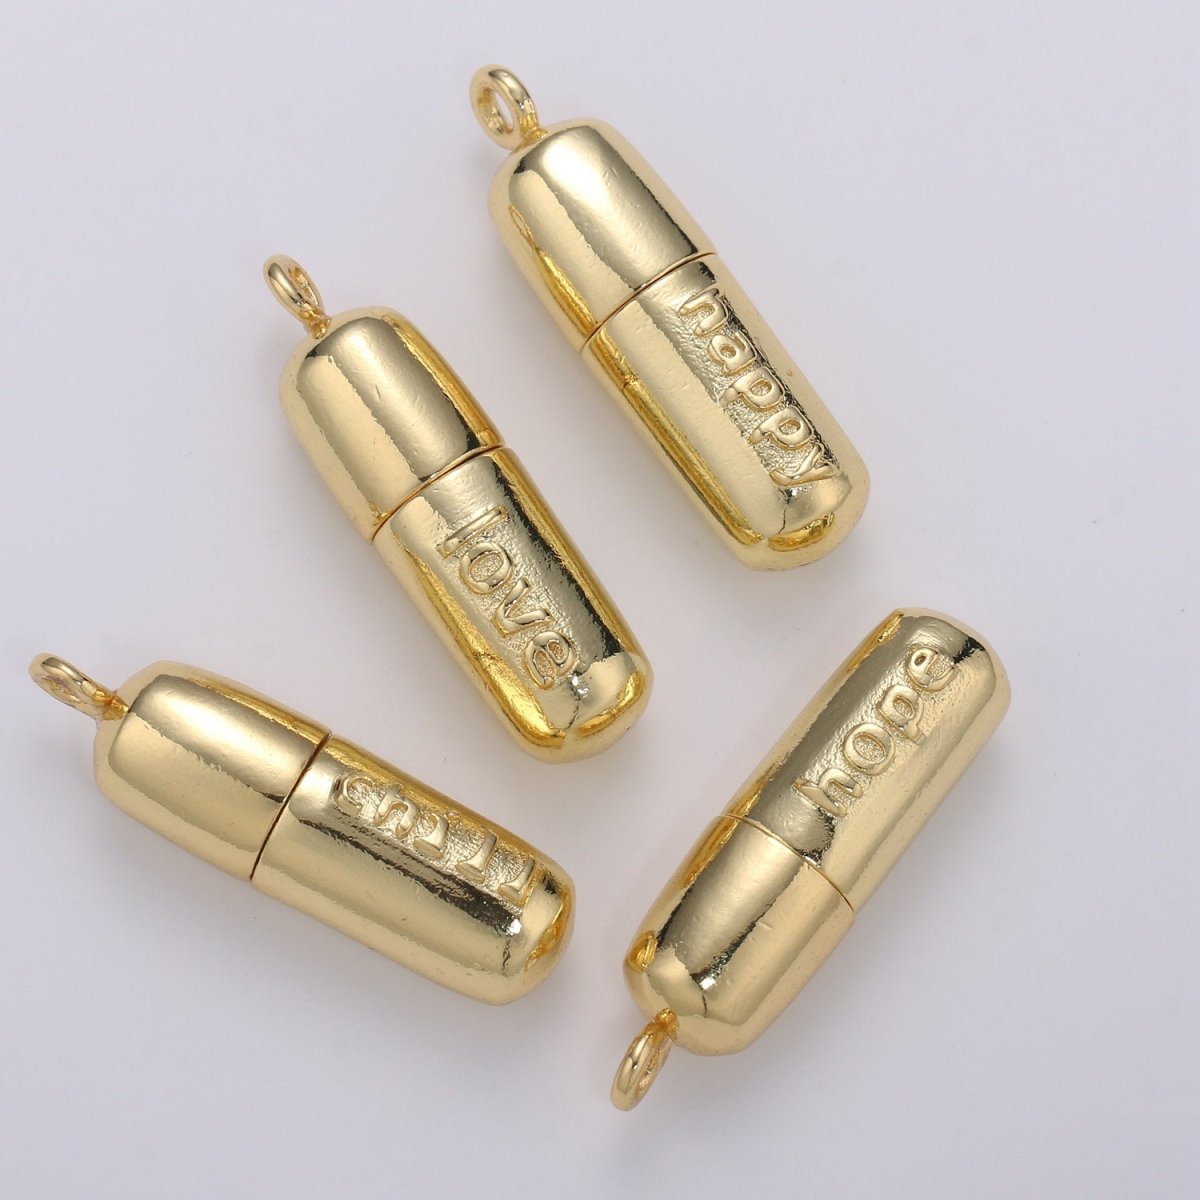 Gold Pill Charm Necklace, Dainty Word Charm Love Pill Bar Pendant, Chill Pill Charm Necklace Pendant Happy Hope Optimist Minimalist Jewelry | D-315 - D-318 - DLUXCA